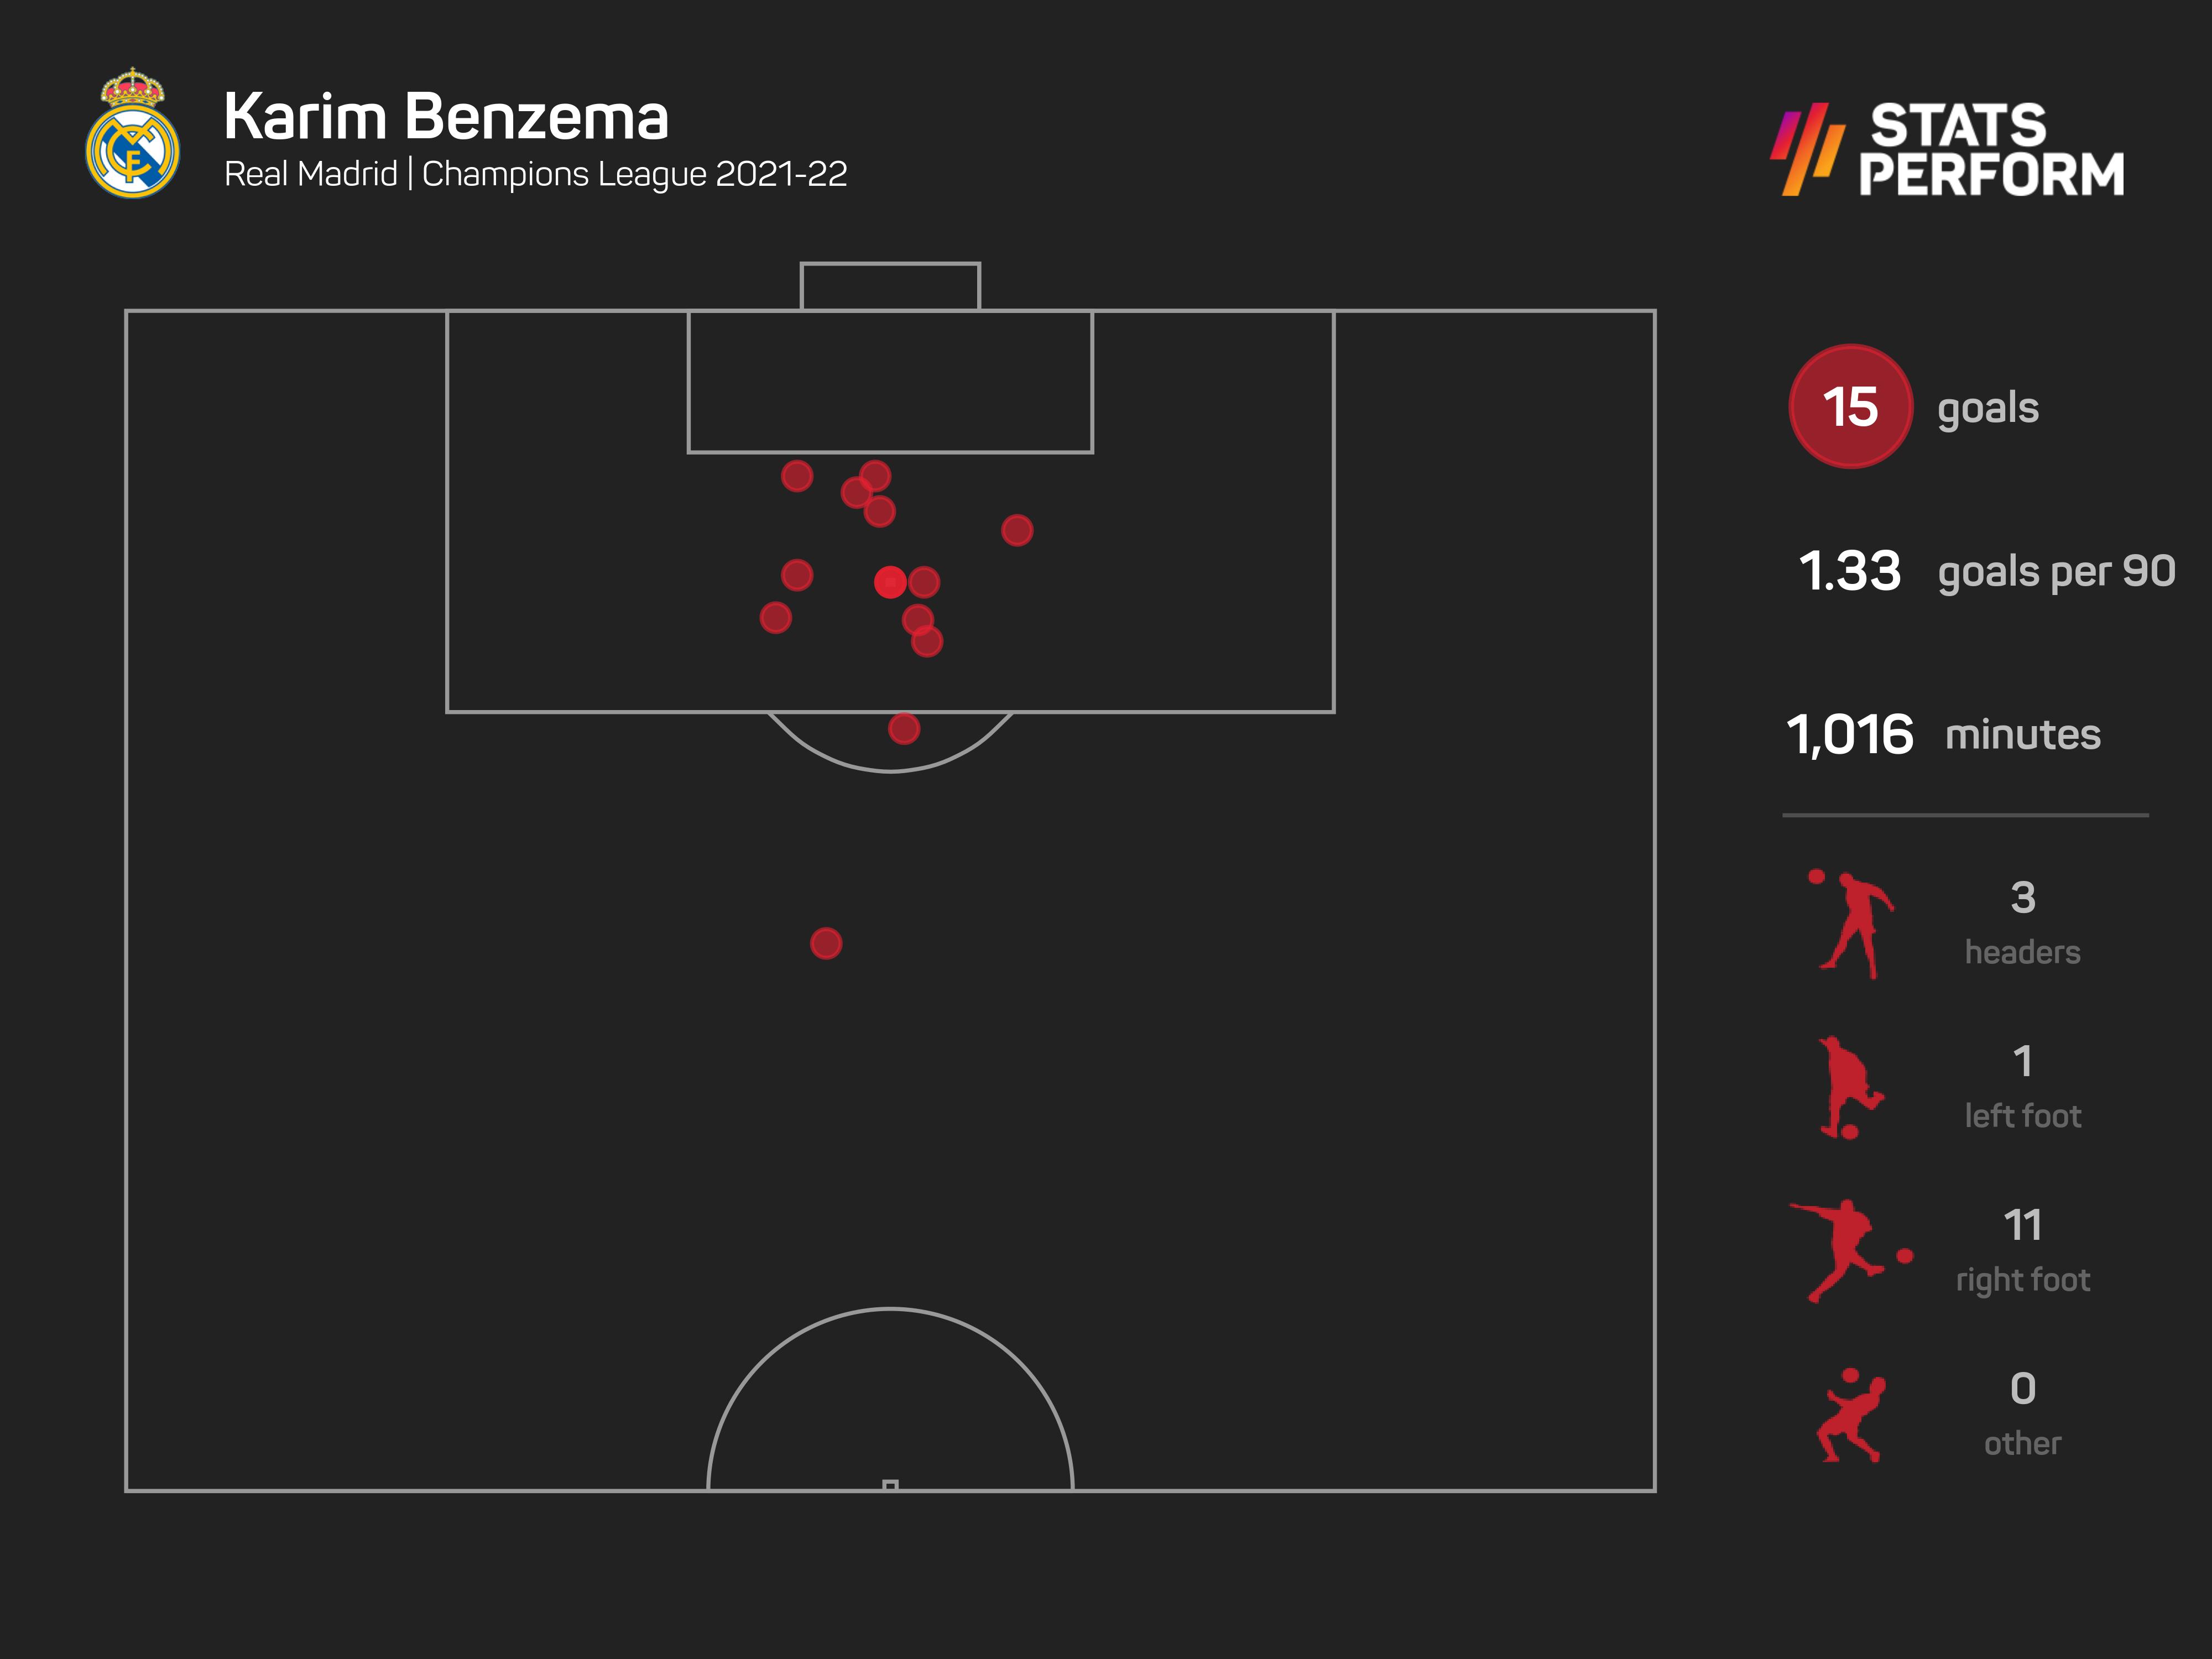 Karim Benzema has 15 Champions League goals this season